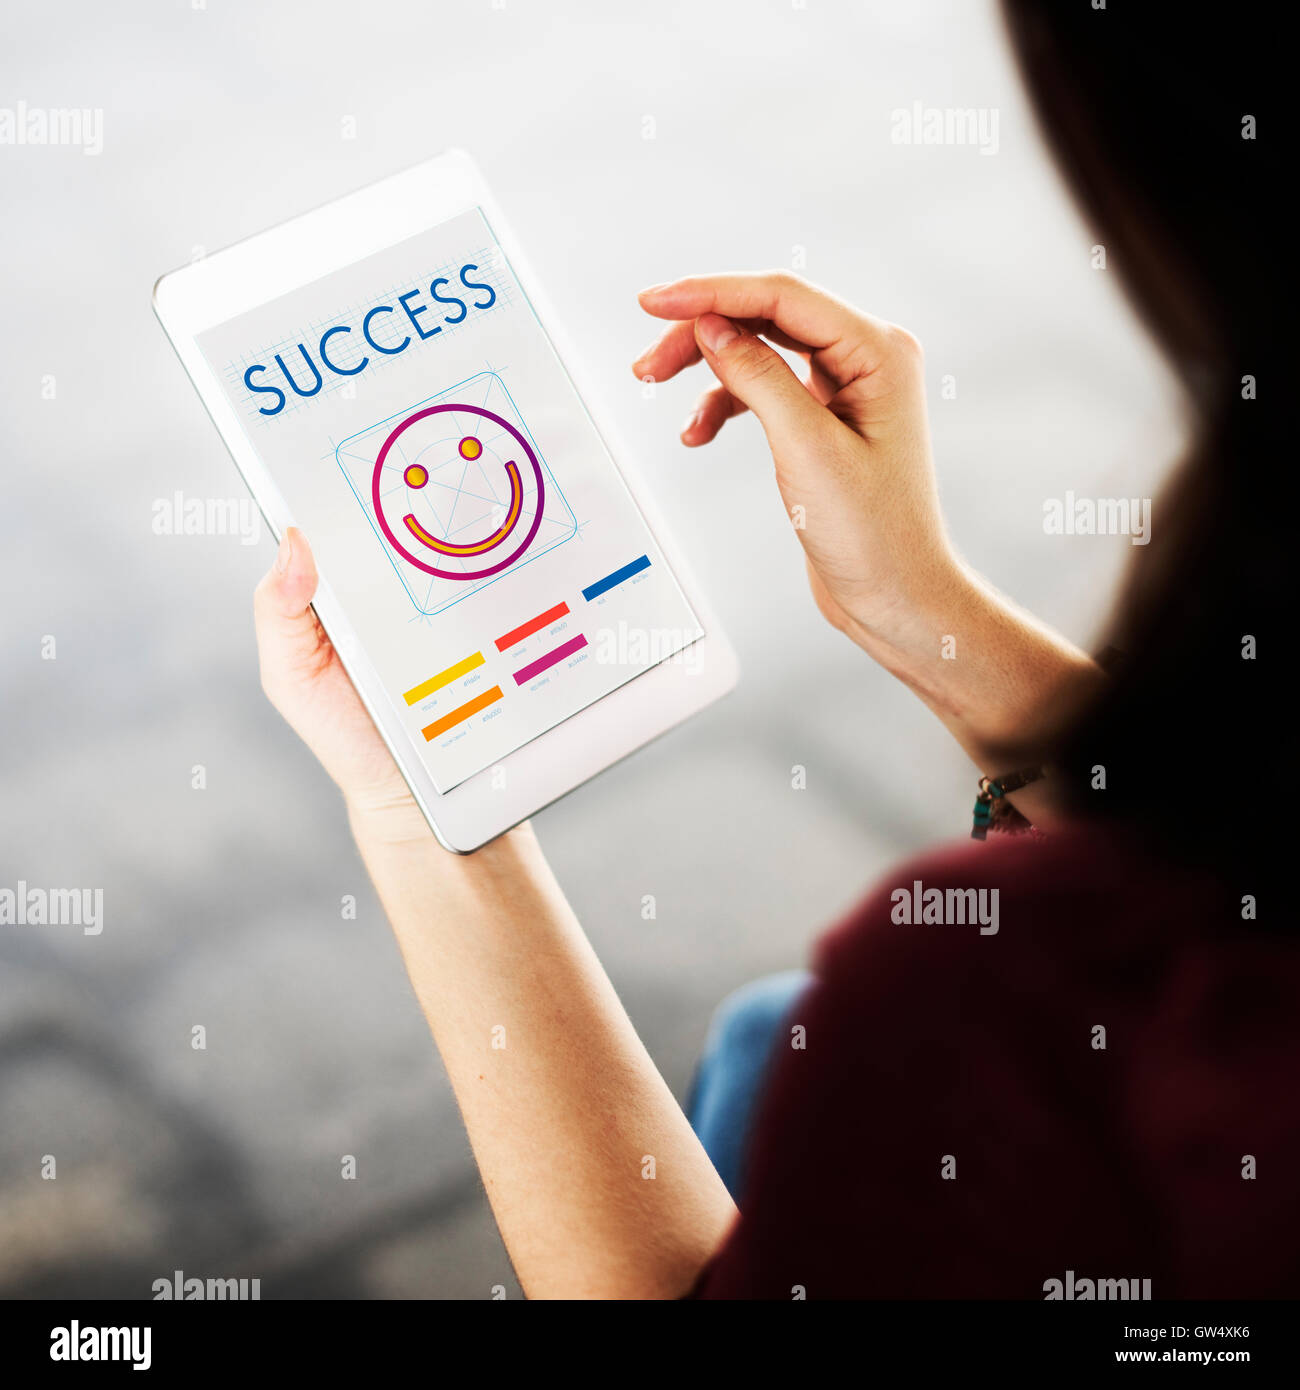 Success Achievement Winning Victory Concept Stock Photo